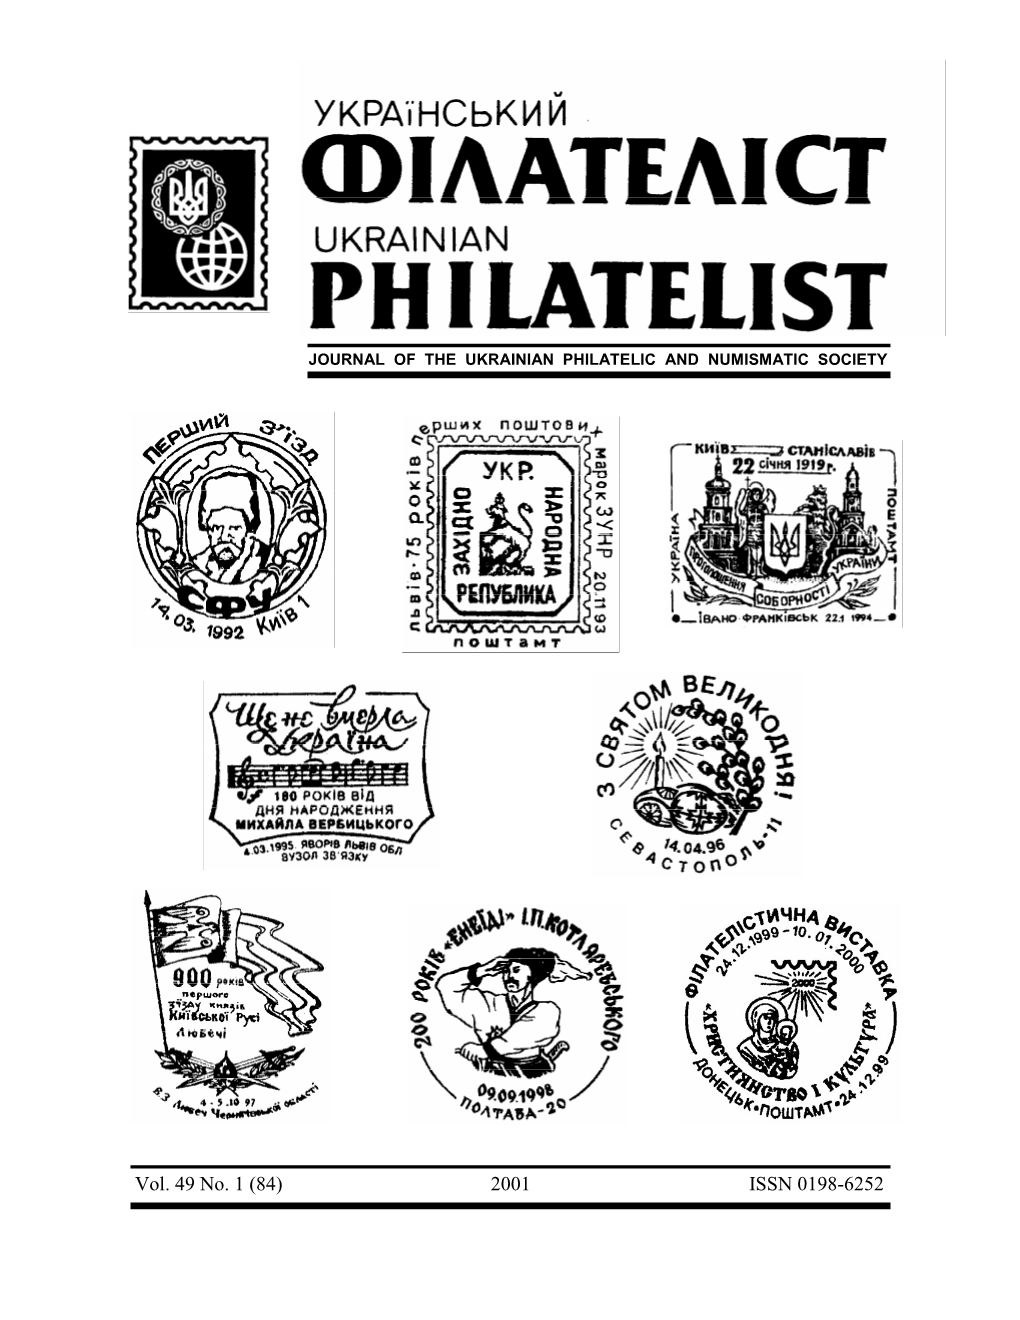 Vol. 49 No. 1 (84) 2001 ISSN 0198-6252 УКРАЇНСЬКИЙ ФІЛАТЕЛІСТ Semiannual Journal of the UKRAINIAN PHILATELIST Ukrainian Philatelic and Numismatic Society